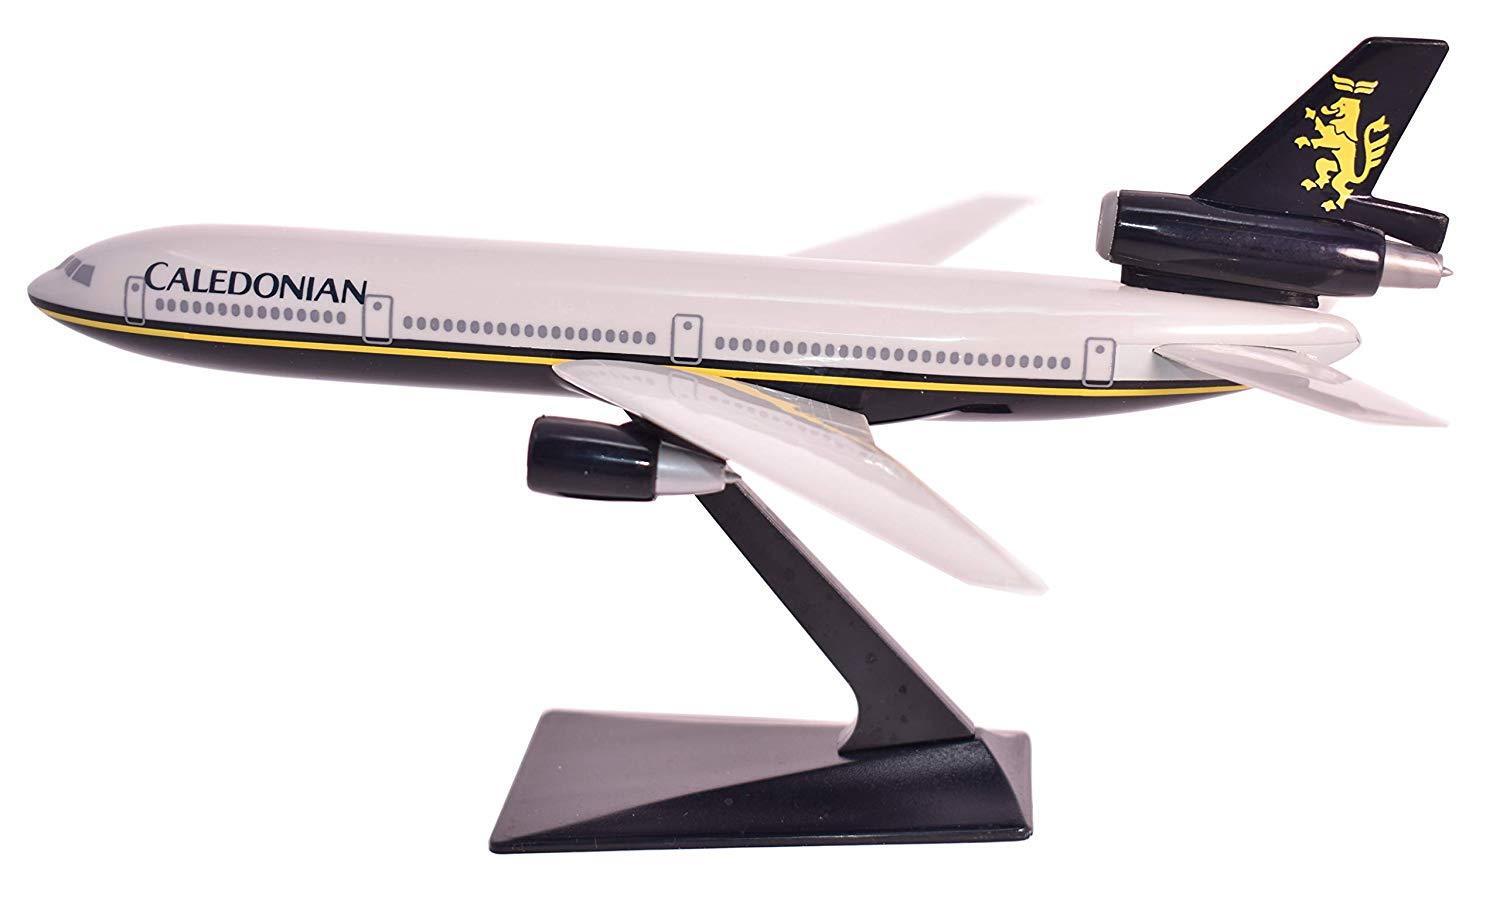 Flight Miniatures Caledonian Airways DC-10 Desk Display Jet Model 1/250 Airplane